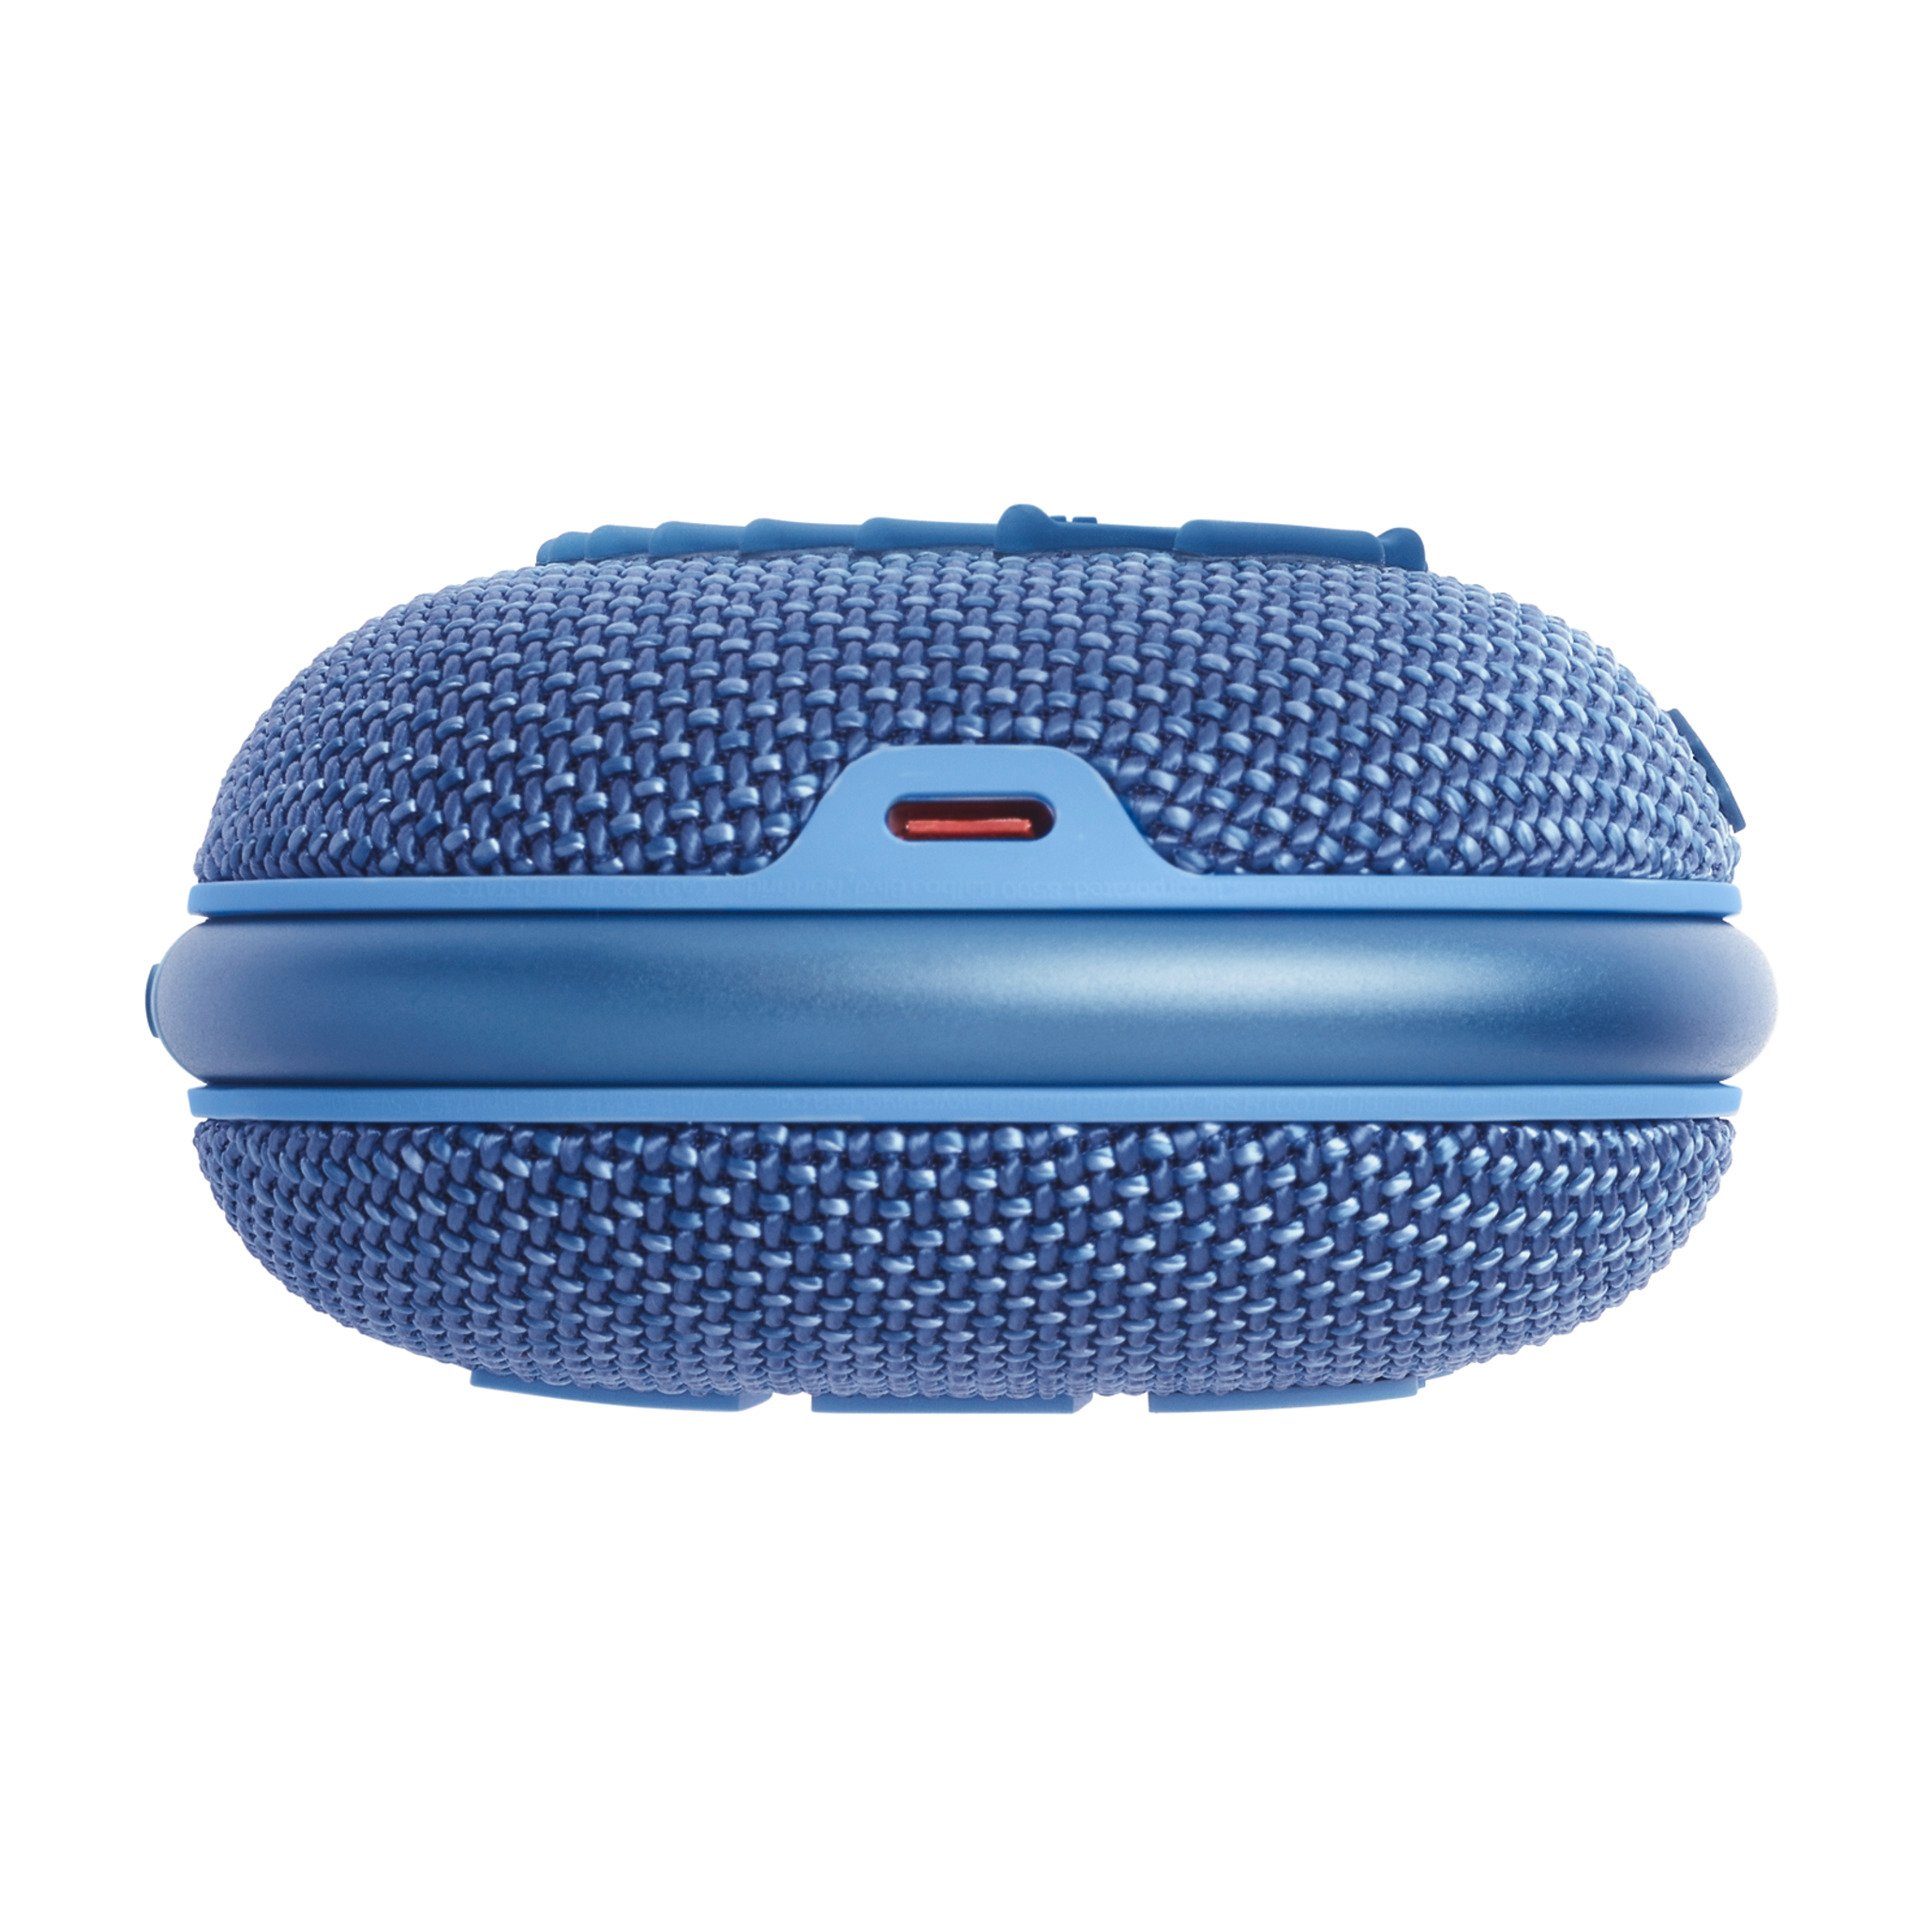 JBL Clip 5 Bluetooth-Lautsprecher 4 W) Blau (Bluetooth, ECO